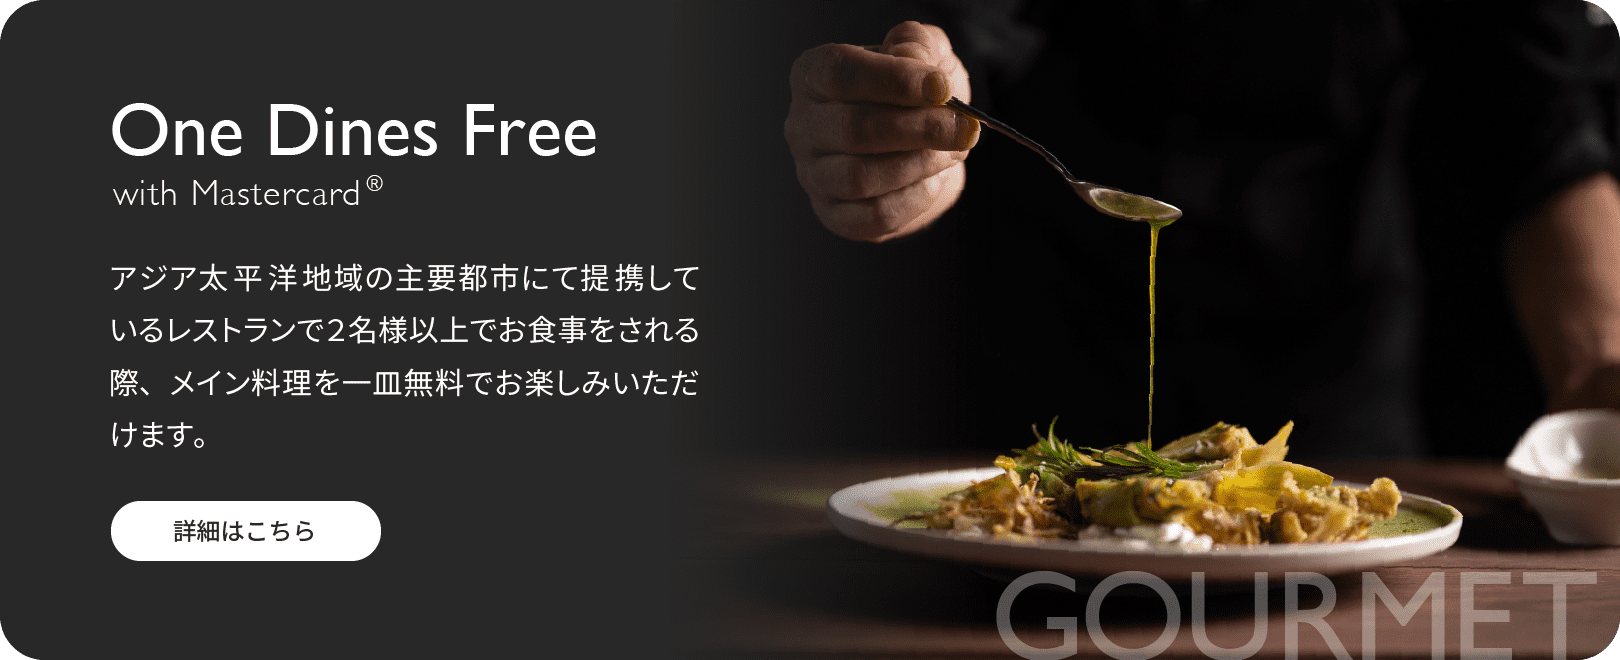 One Dines Free with Mastercard® アジア太平洋地域の主要都市にて提携しているレストランで２名様以上でお食事をされる際、メイン料理を一皿無料でお楽しみいただけます。詳細はこちら